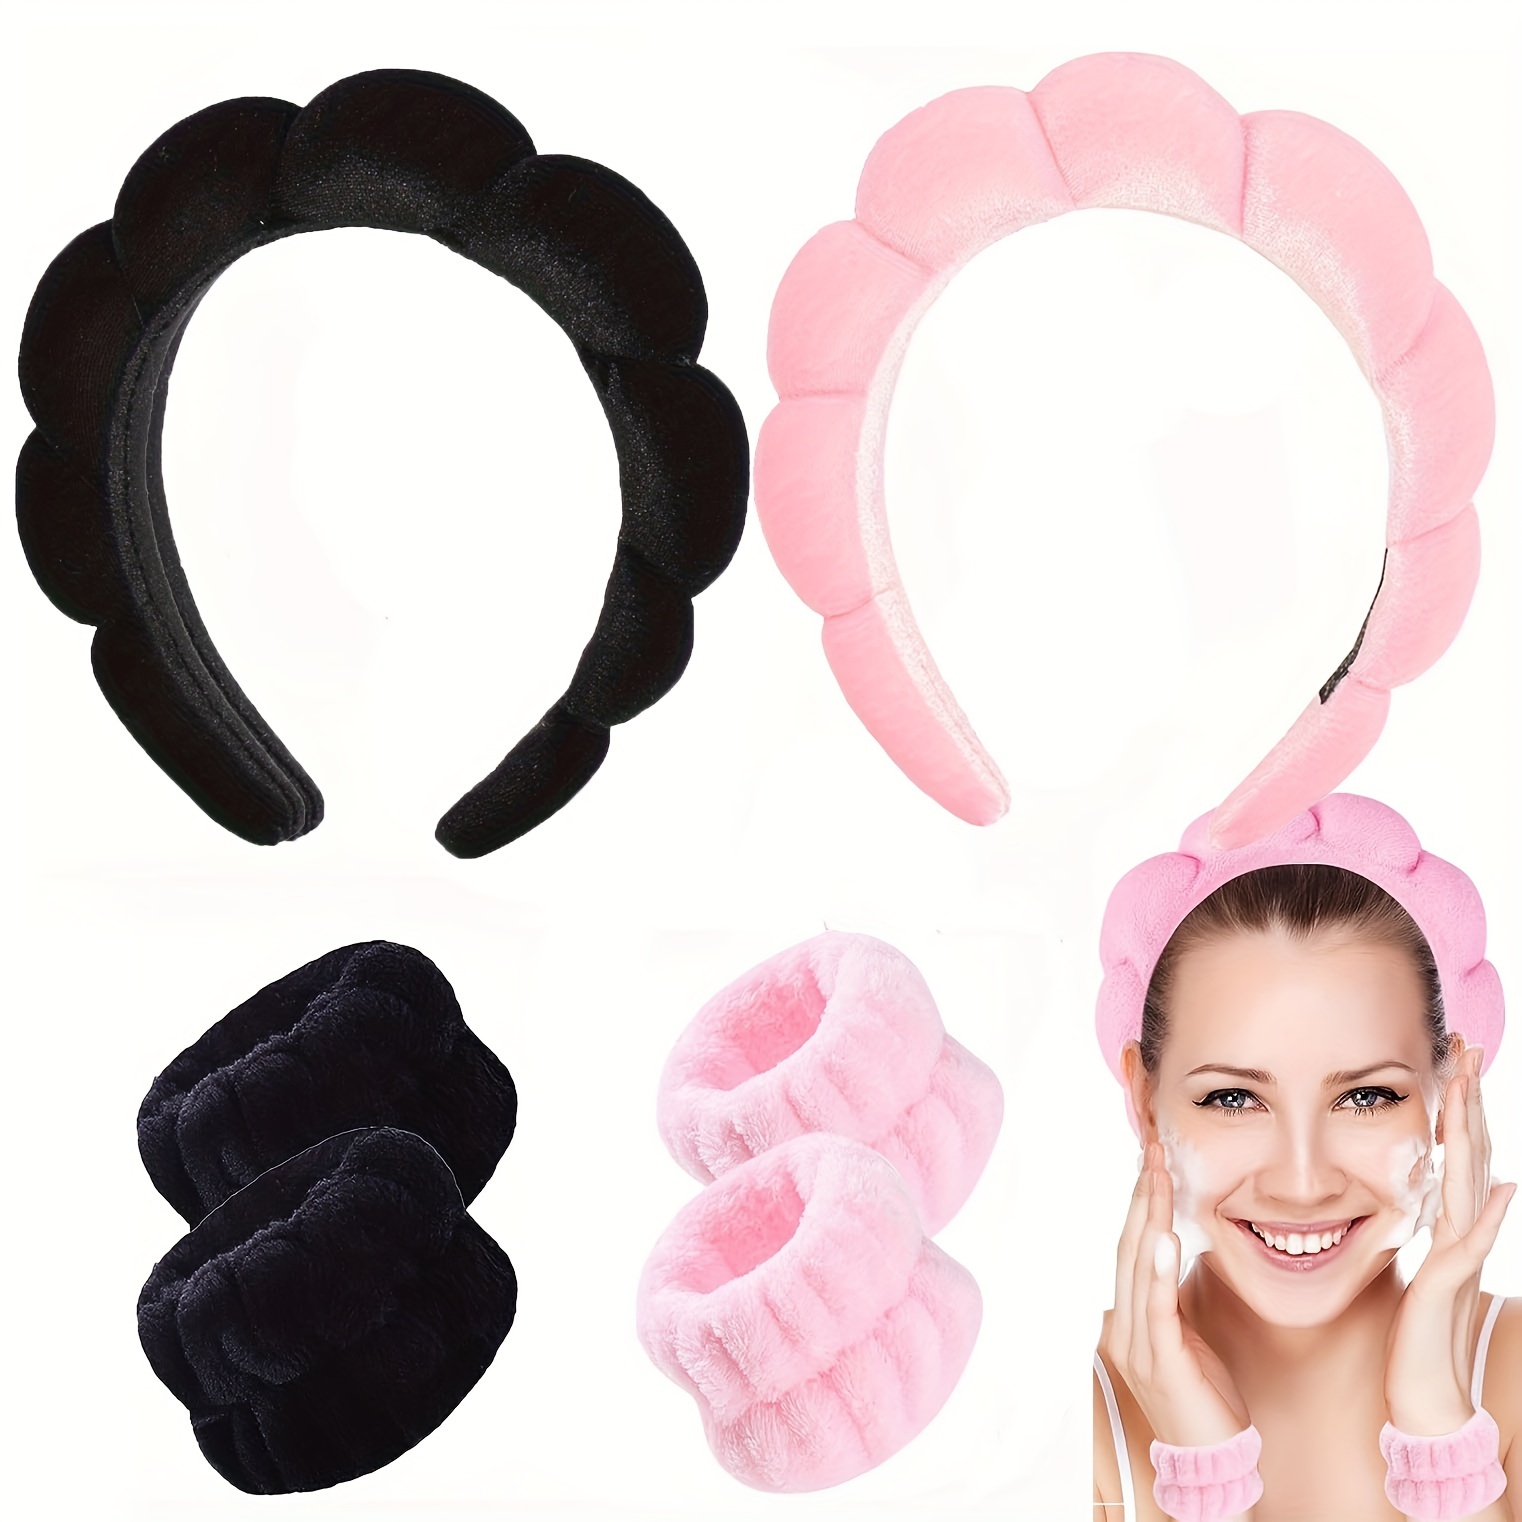 

3pcs/6pcs Spa Headband Wristband Set, Makeup Facial Headband And Wristband, Hair Accessories For Washing Face Spa Skincare Wear